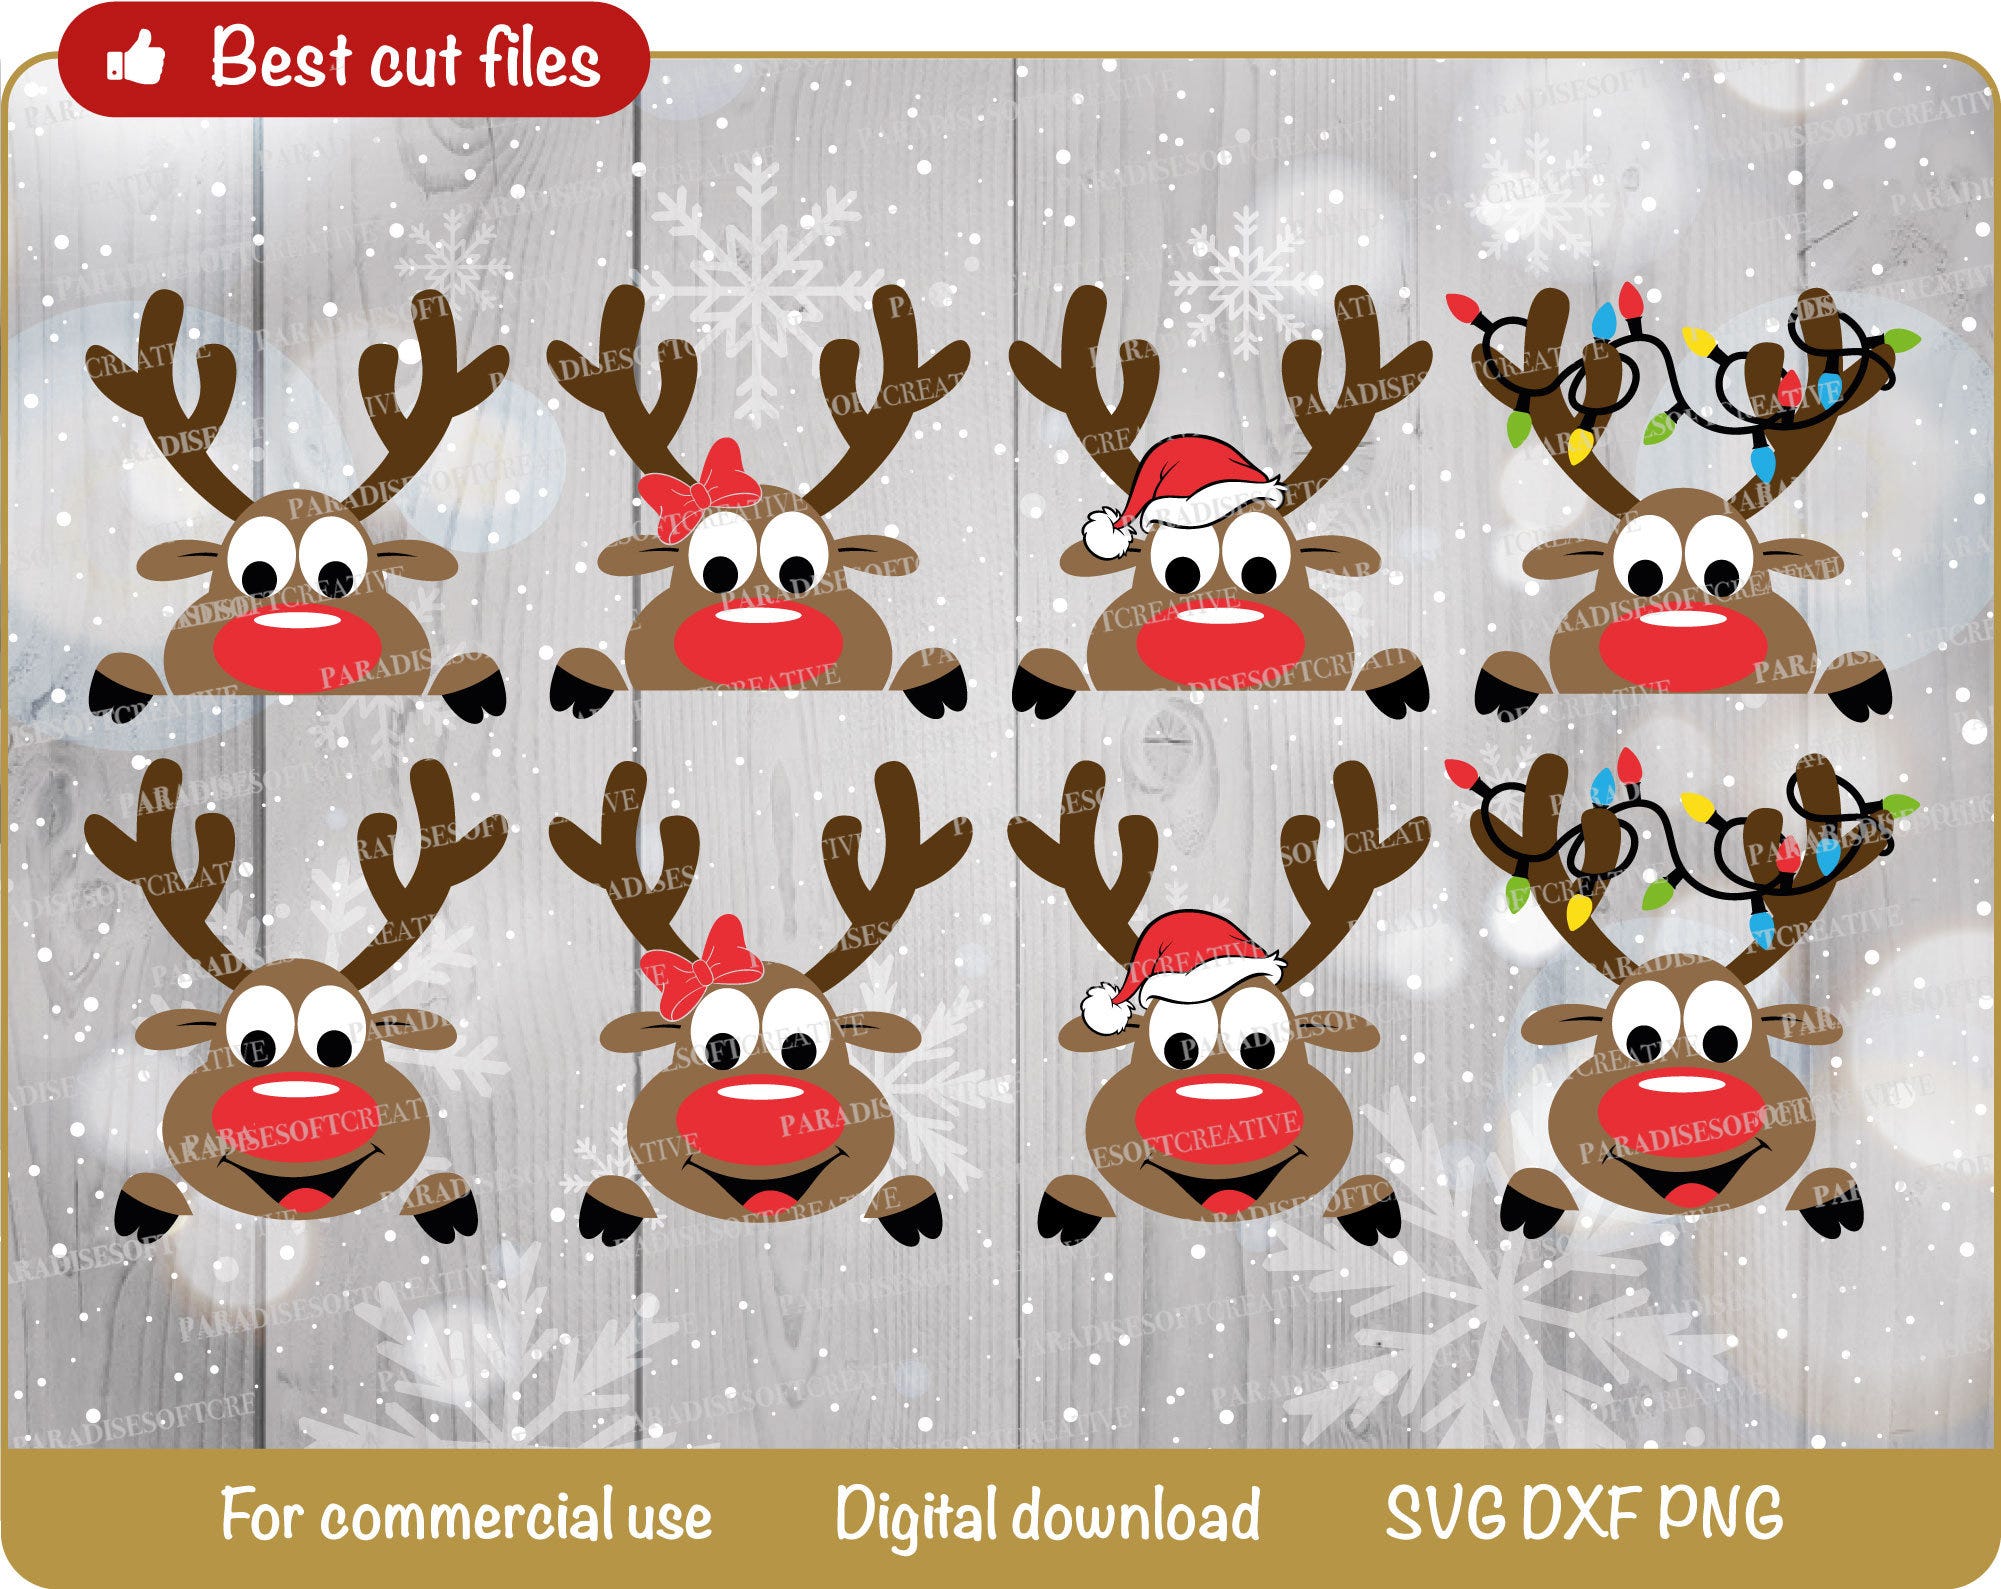 Reindeer SVG, Reindeer Face Svg, Christmas Reindeer Svg, Rudolph reindeer svg, Xmas reindeer svg, Santa reindeer, DXF Cricut cut file vector